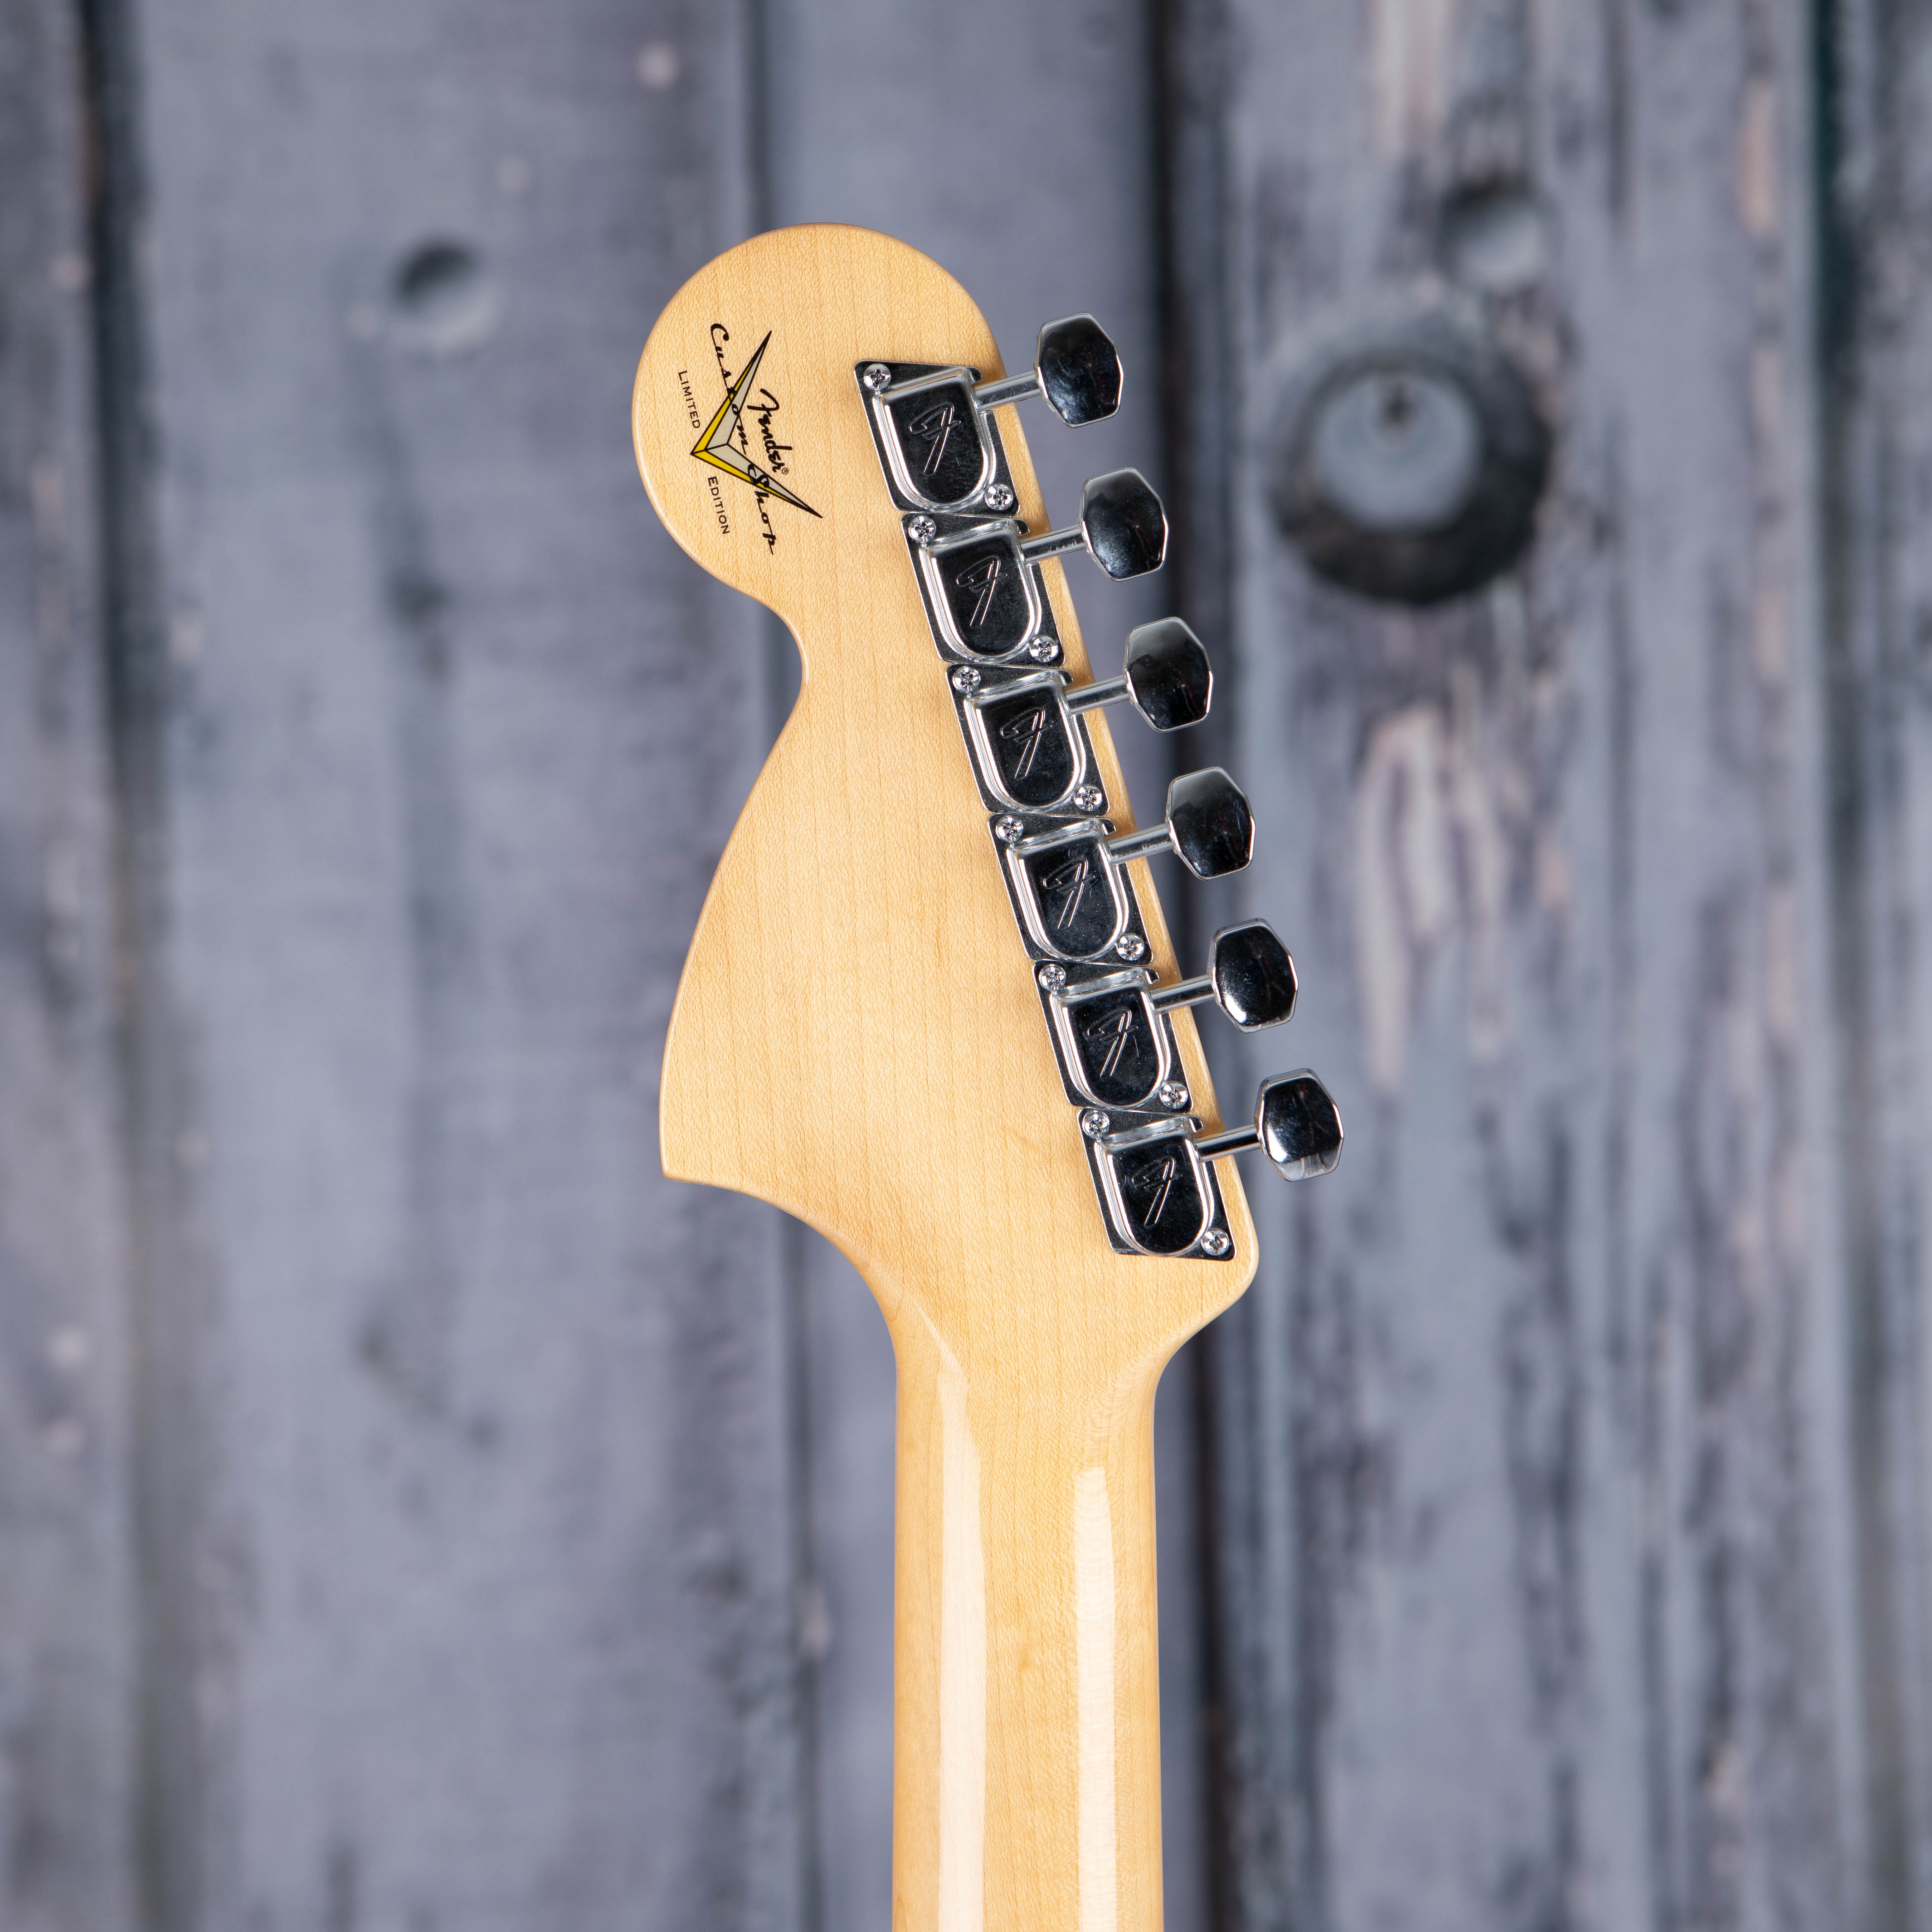 Fender Custom Shop 1969 Stratocaster Journeyman Relic Closet Classic Electric Guitar, Aged Fire Mist Silver, back headstock